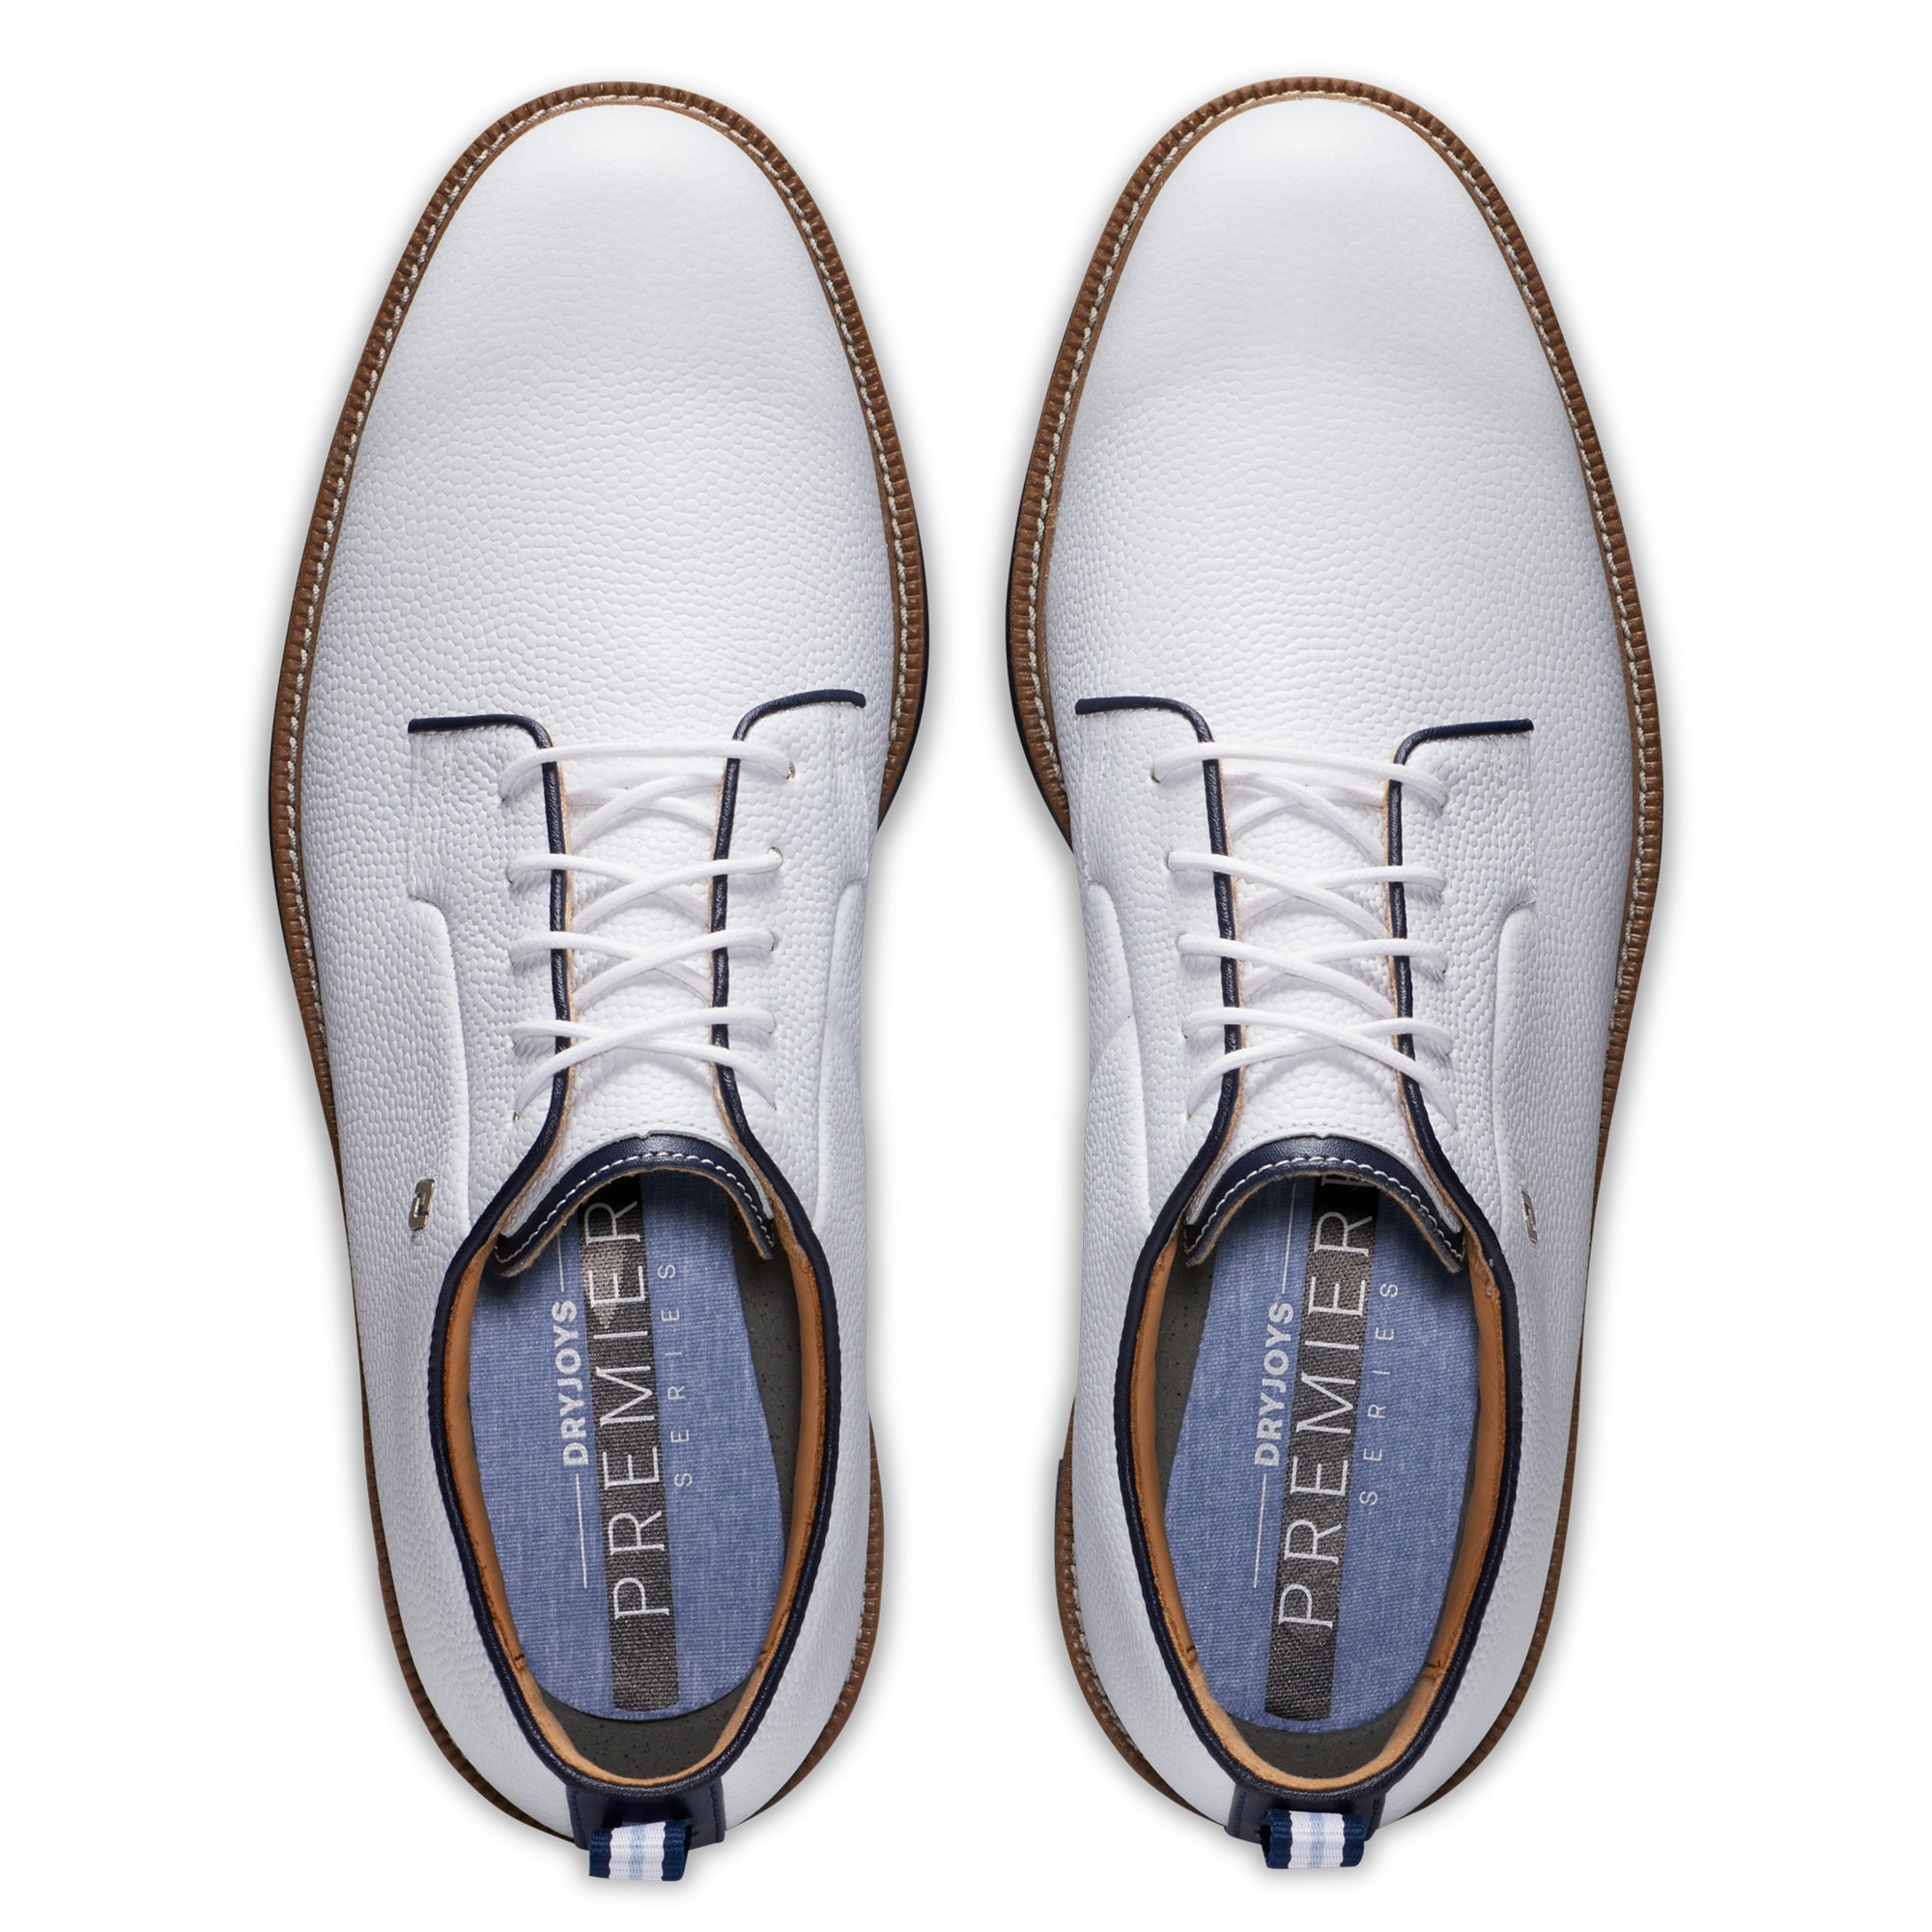 footjoy-premiere-series-field-golf-shoes-54396-white-navy